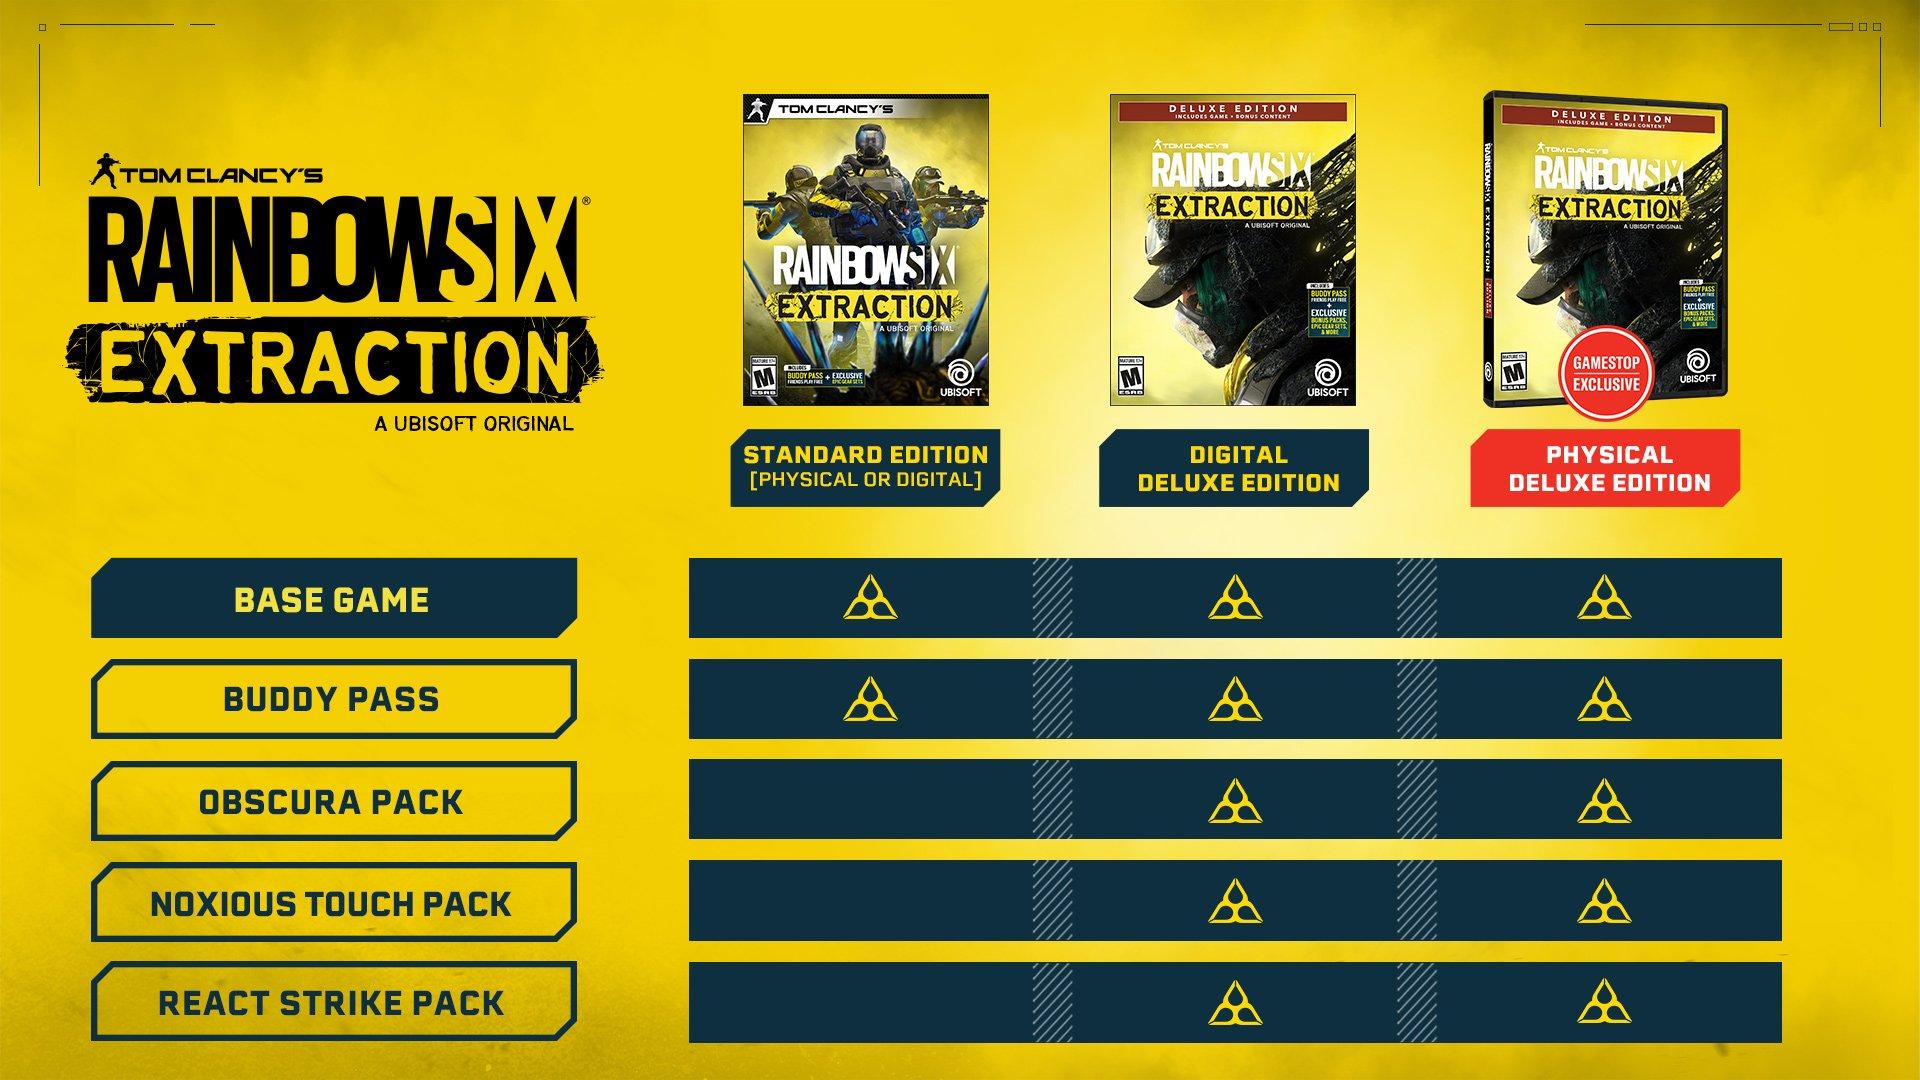 Tom Clancy\'s Rainbow Six: PS4 | Extraction | 4 GameStop PlayStation 